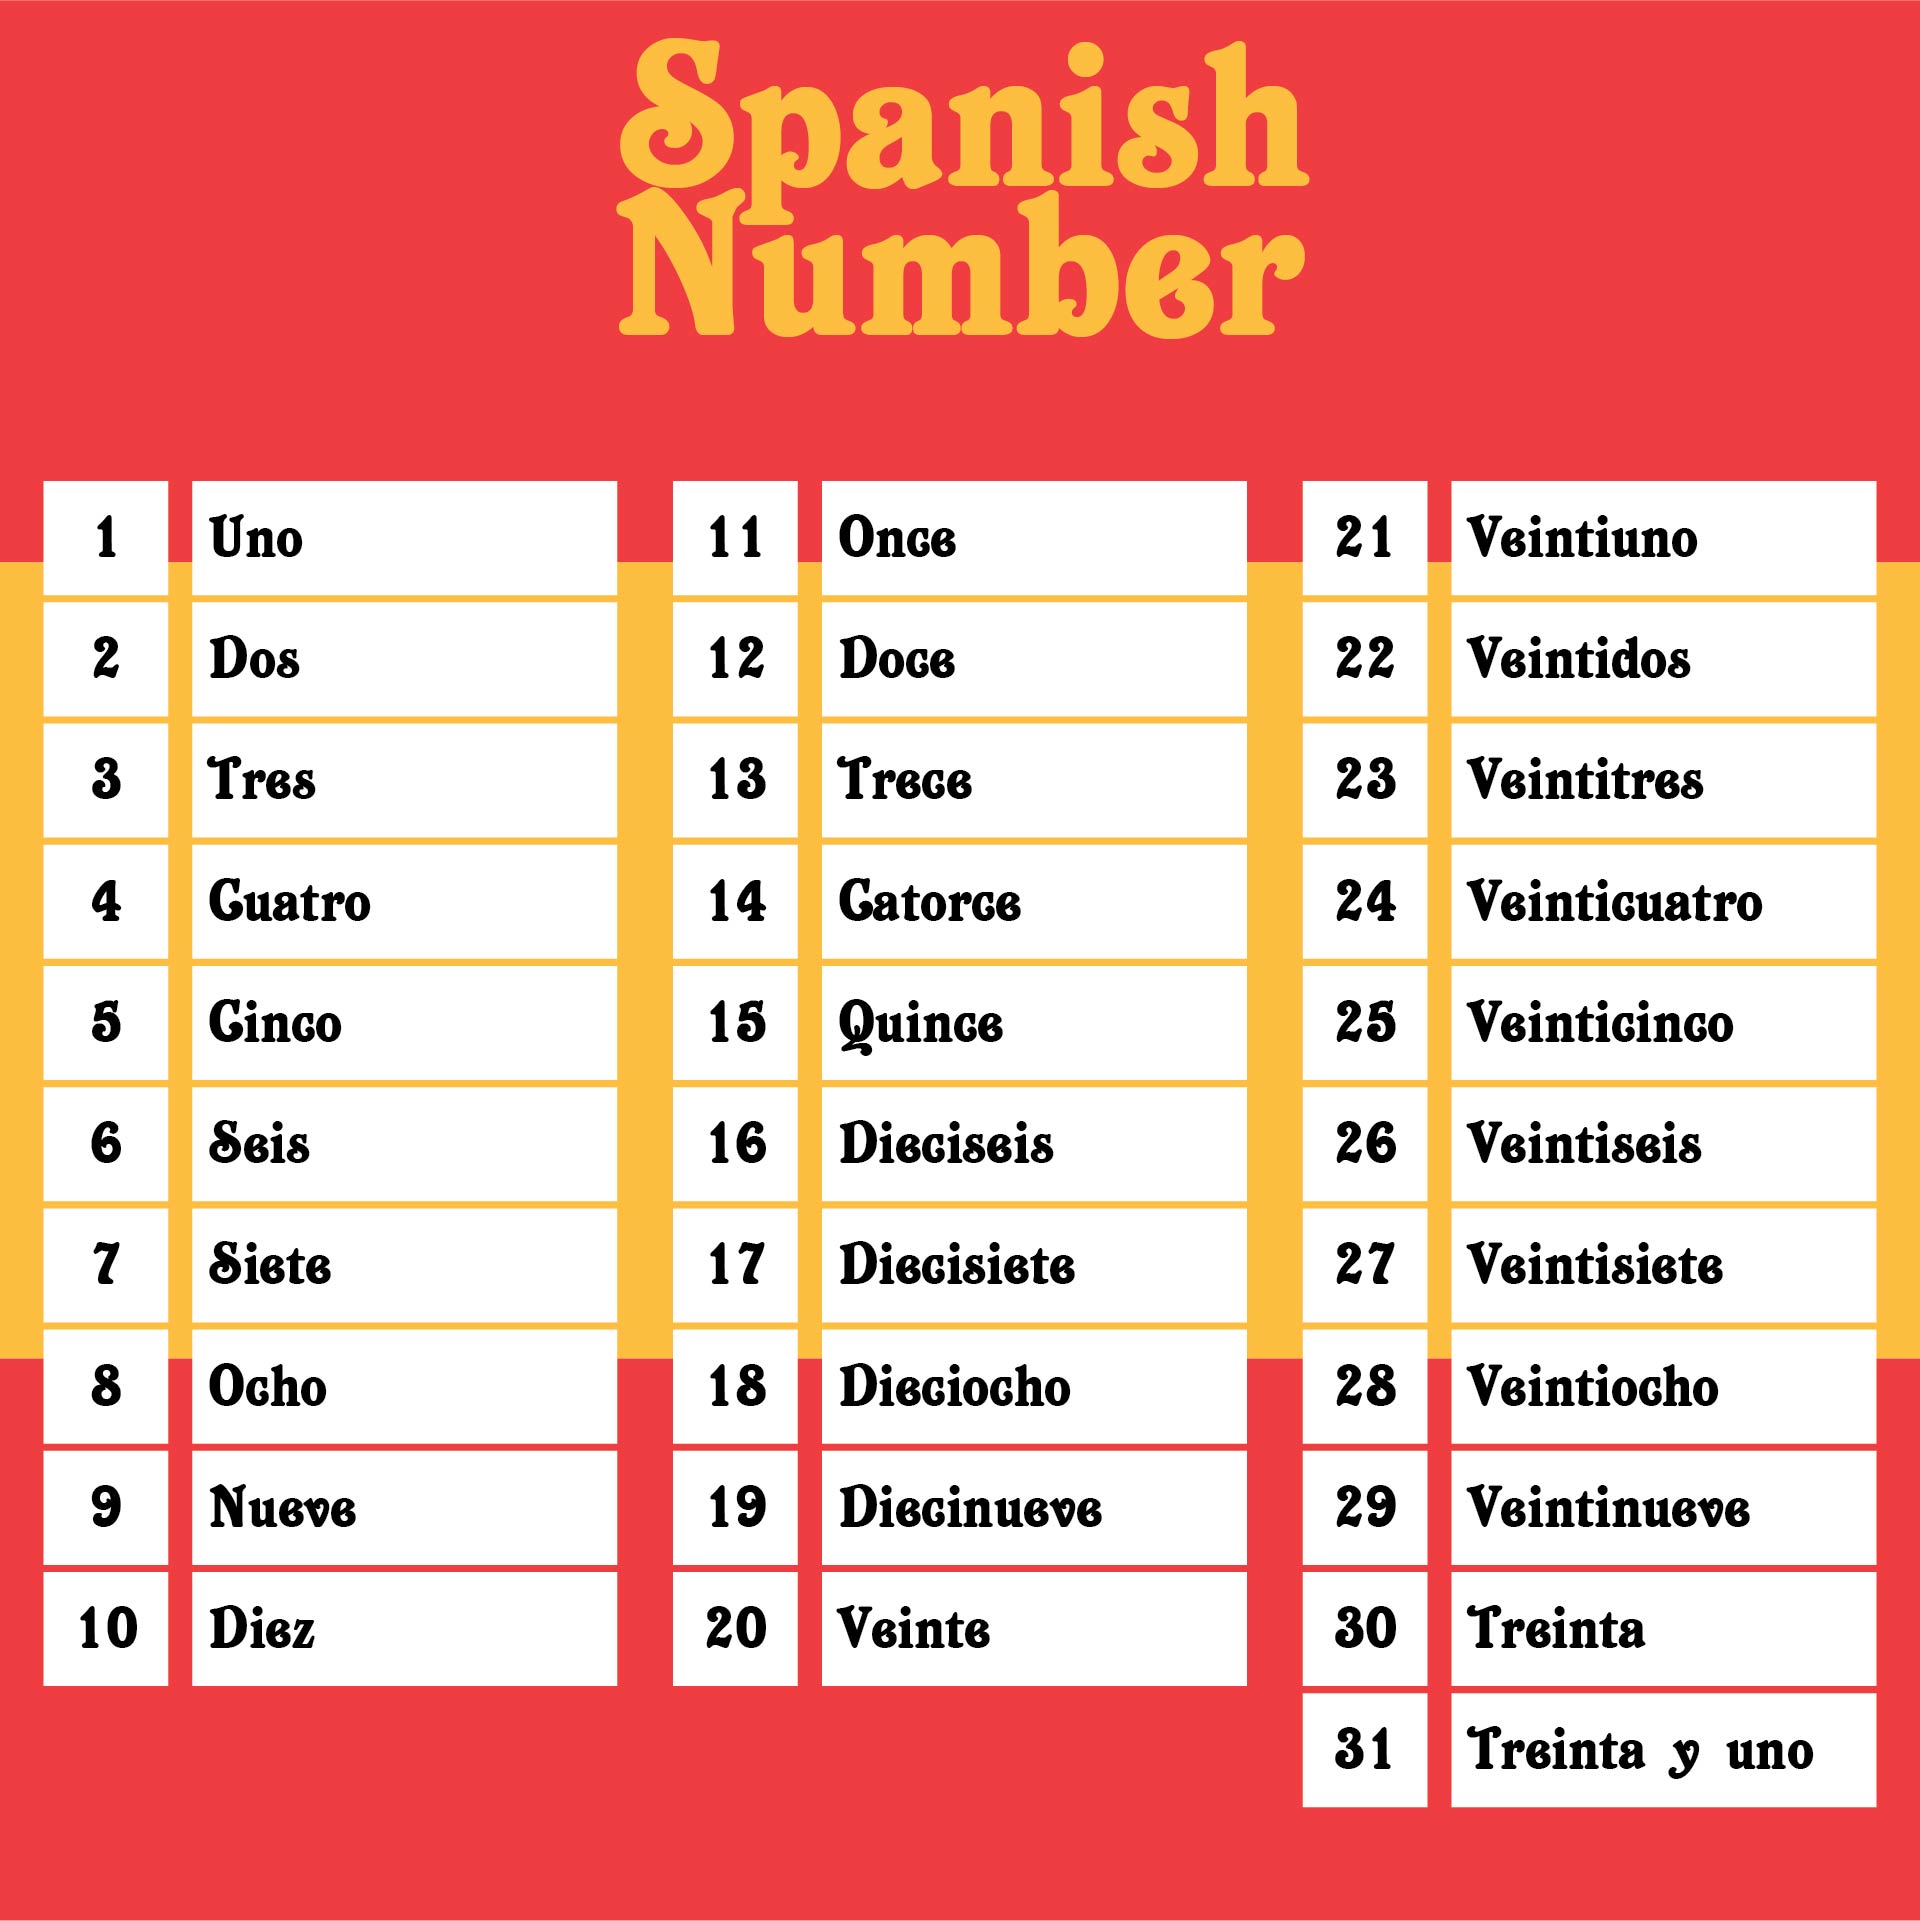 Spanish Numbers 1-31